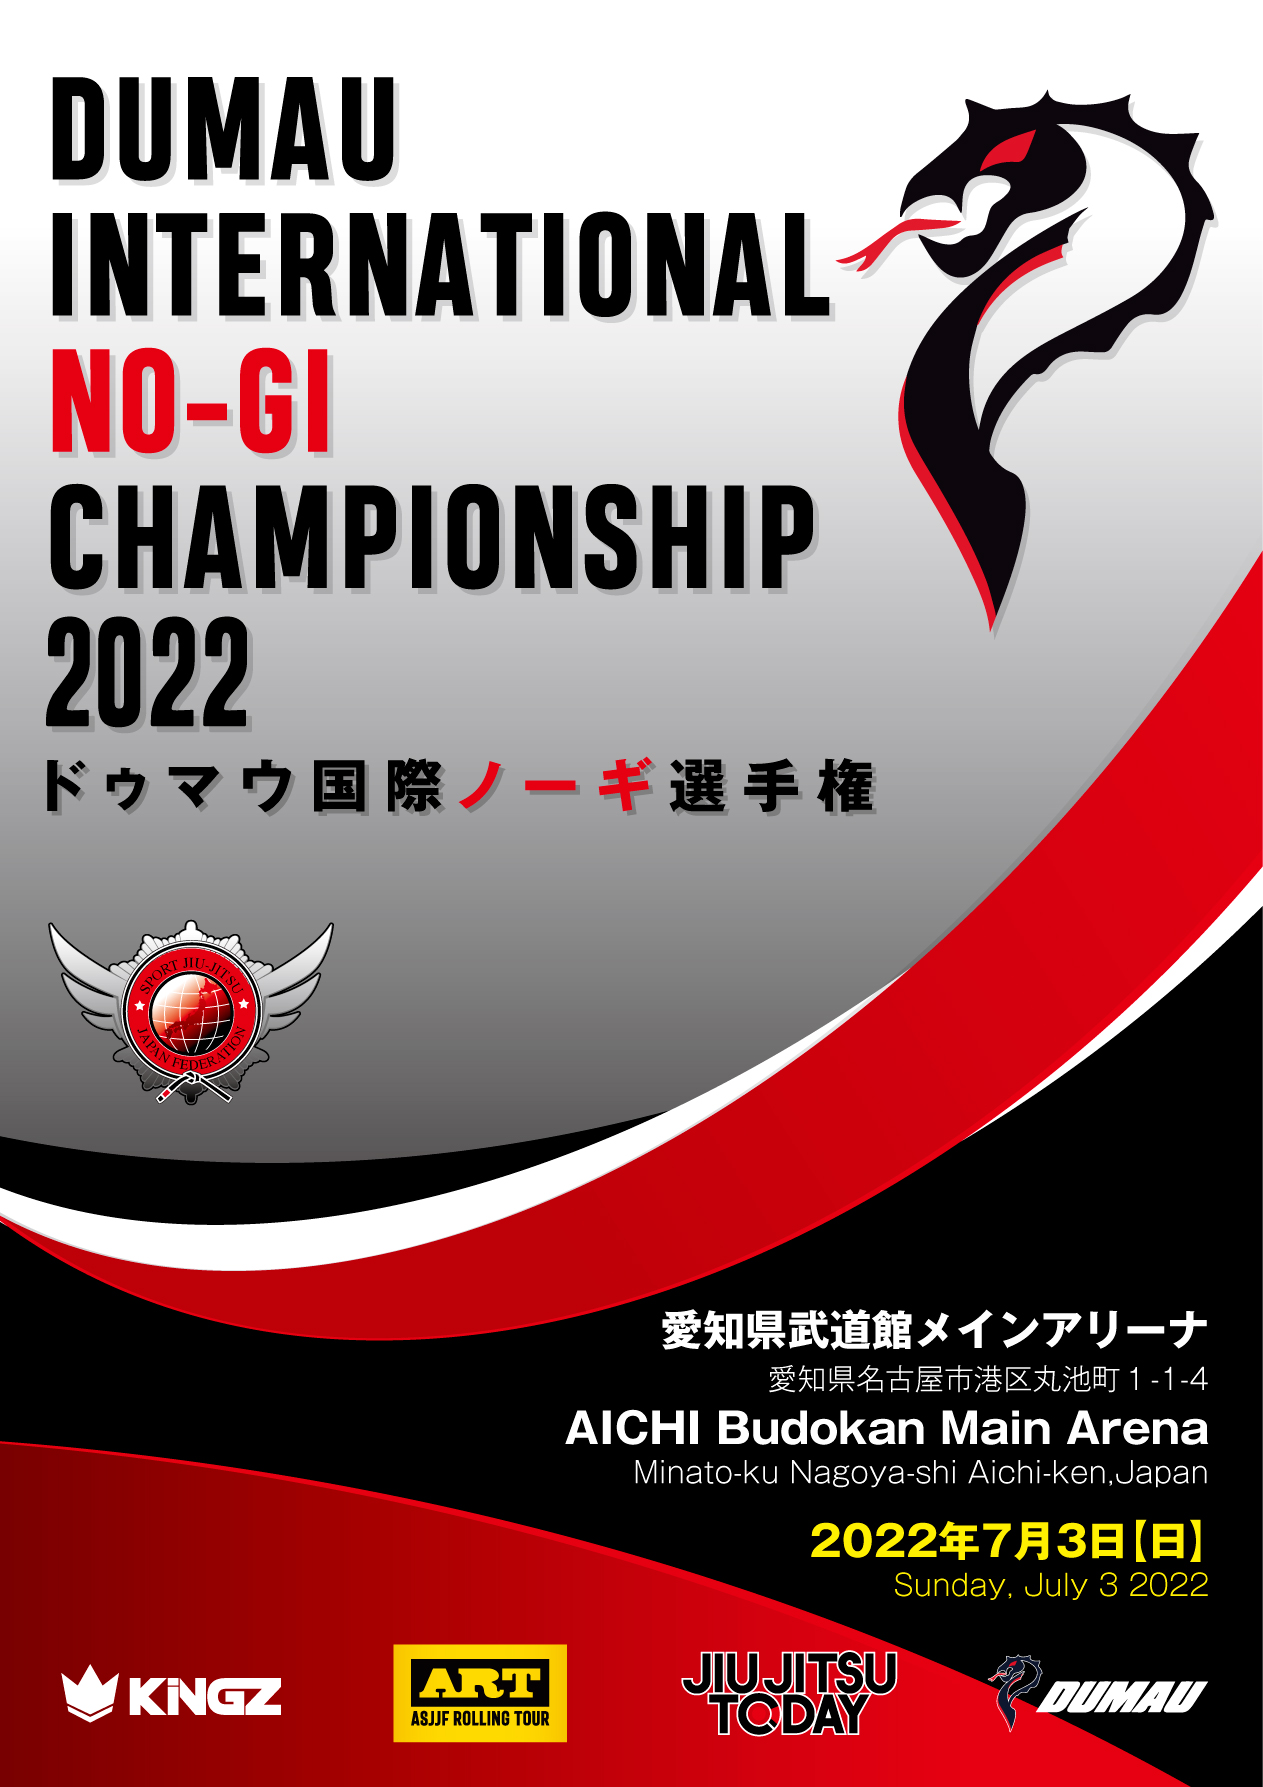 Dumau international no-gi championship 2022 (In Central Japan)